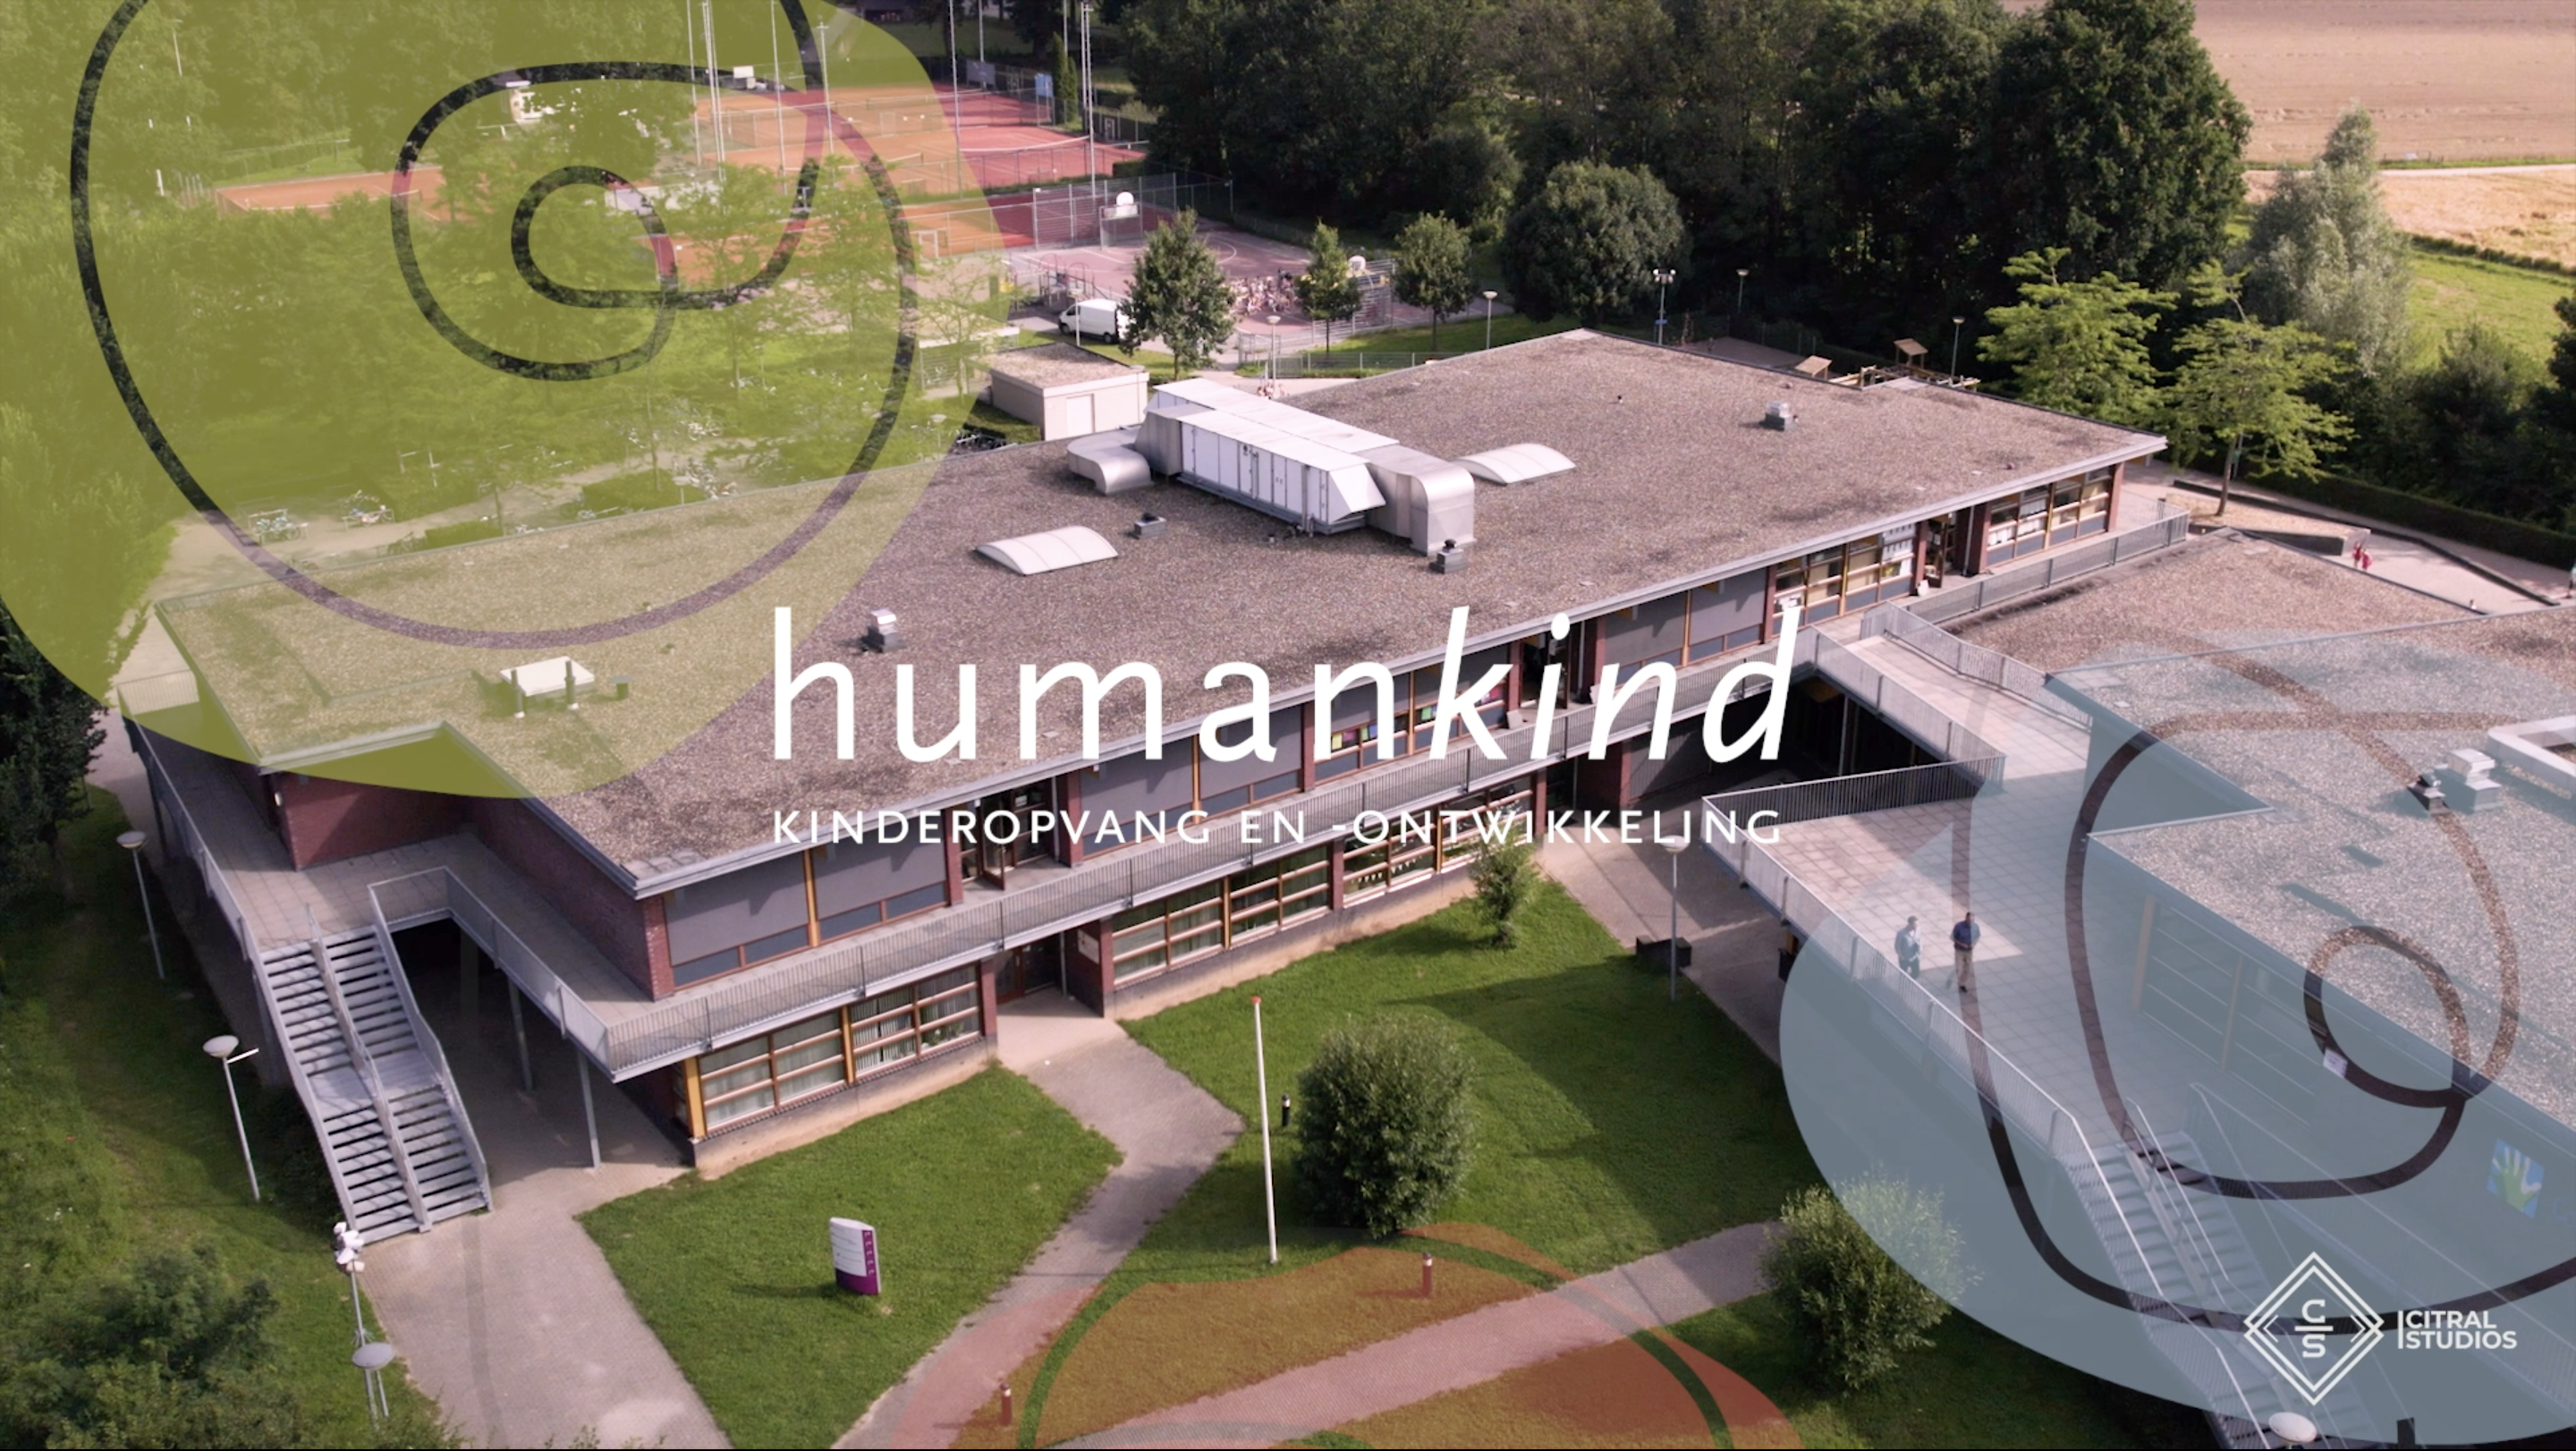 Humankind corporate videos